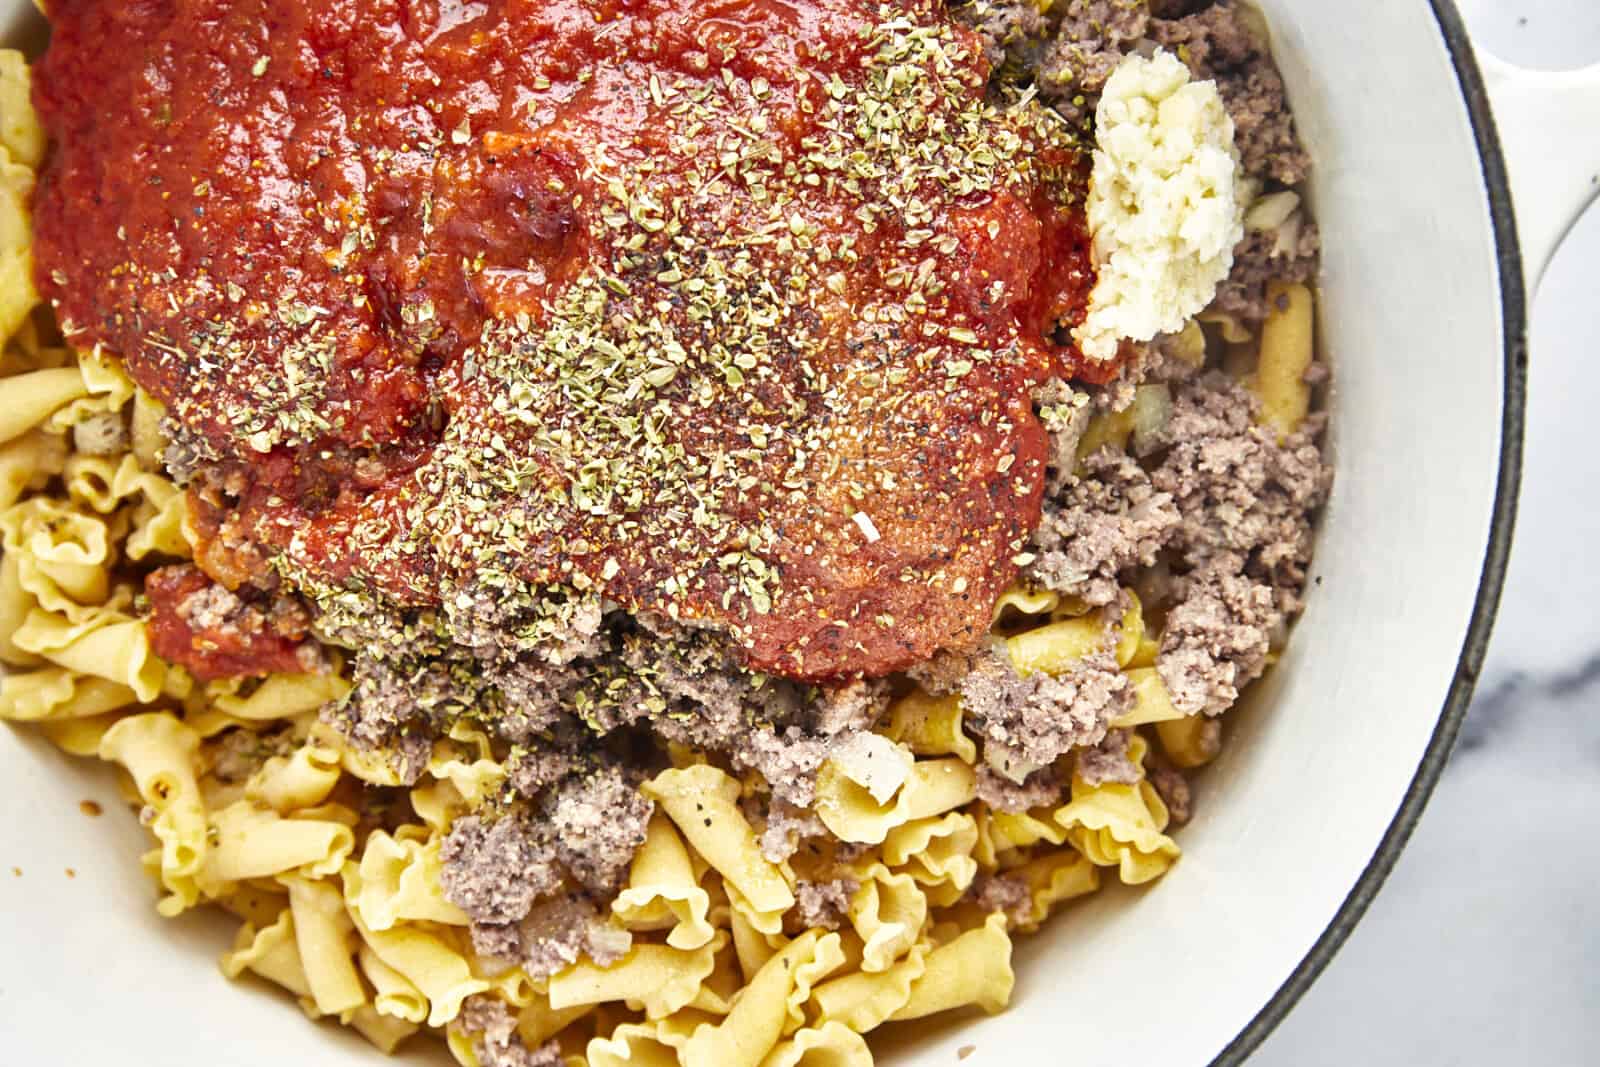 Lasagnette noodles, cooked ground beef, marinara sauce, and seasonings. 